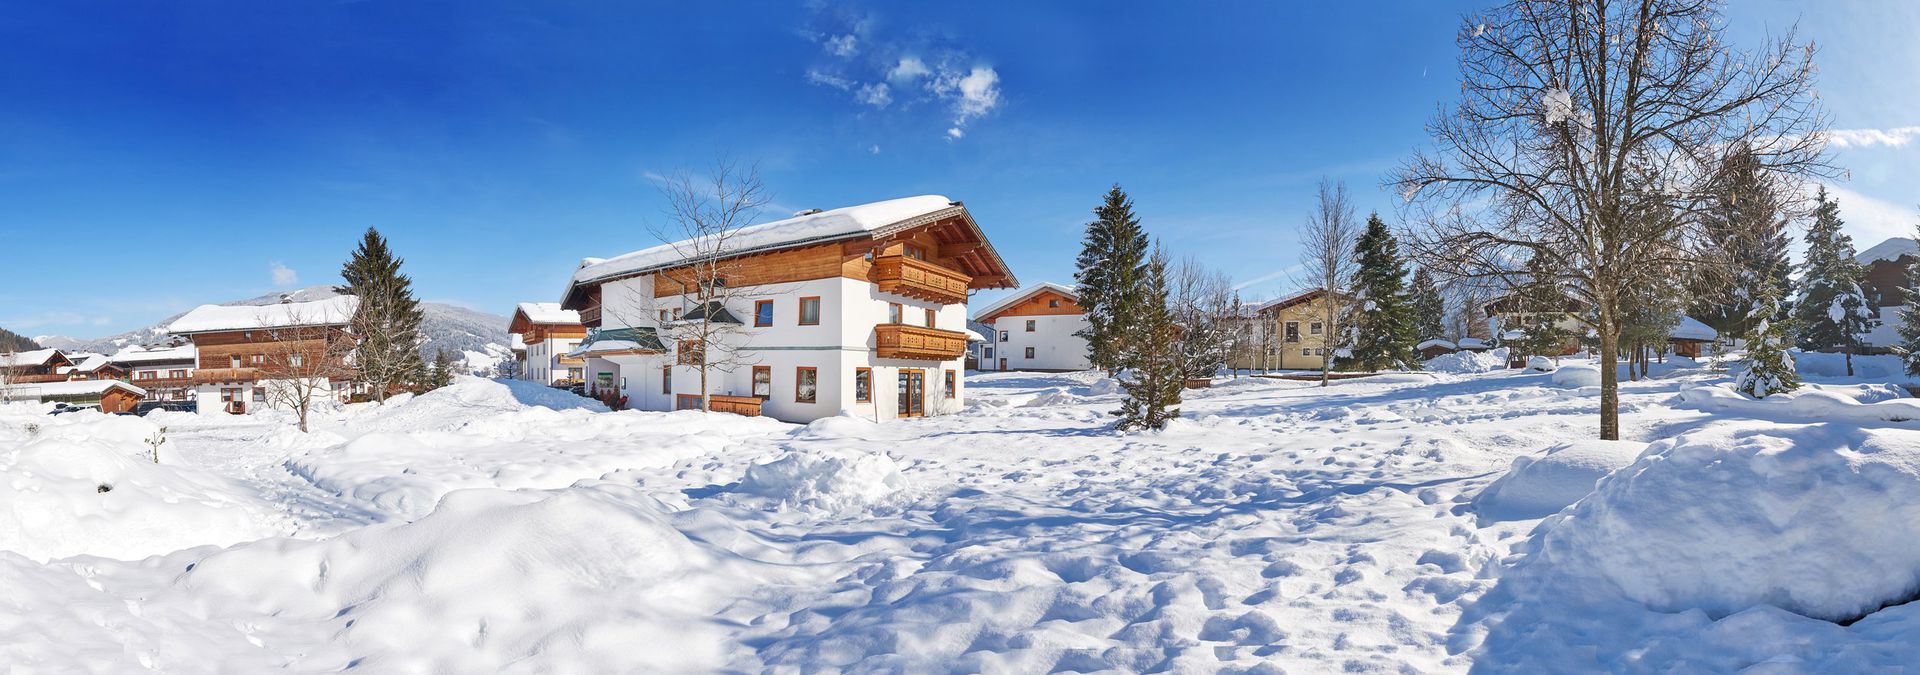 Ferienanlage Sonnberg (Winter Special) in Flachau-Wagrain, Ferienanlage Sonnberg (Winter Special) / Österreich